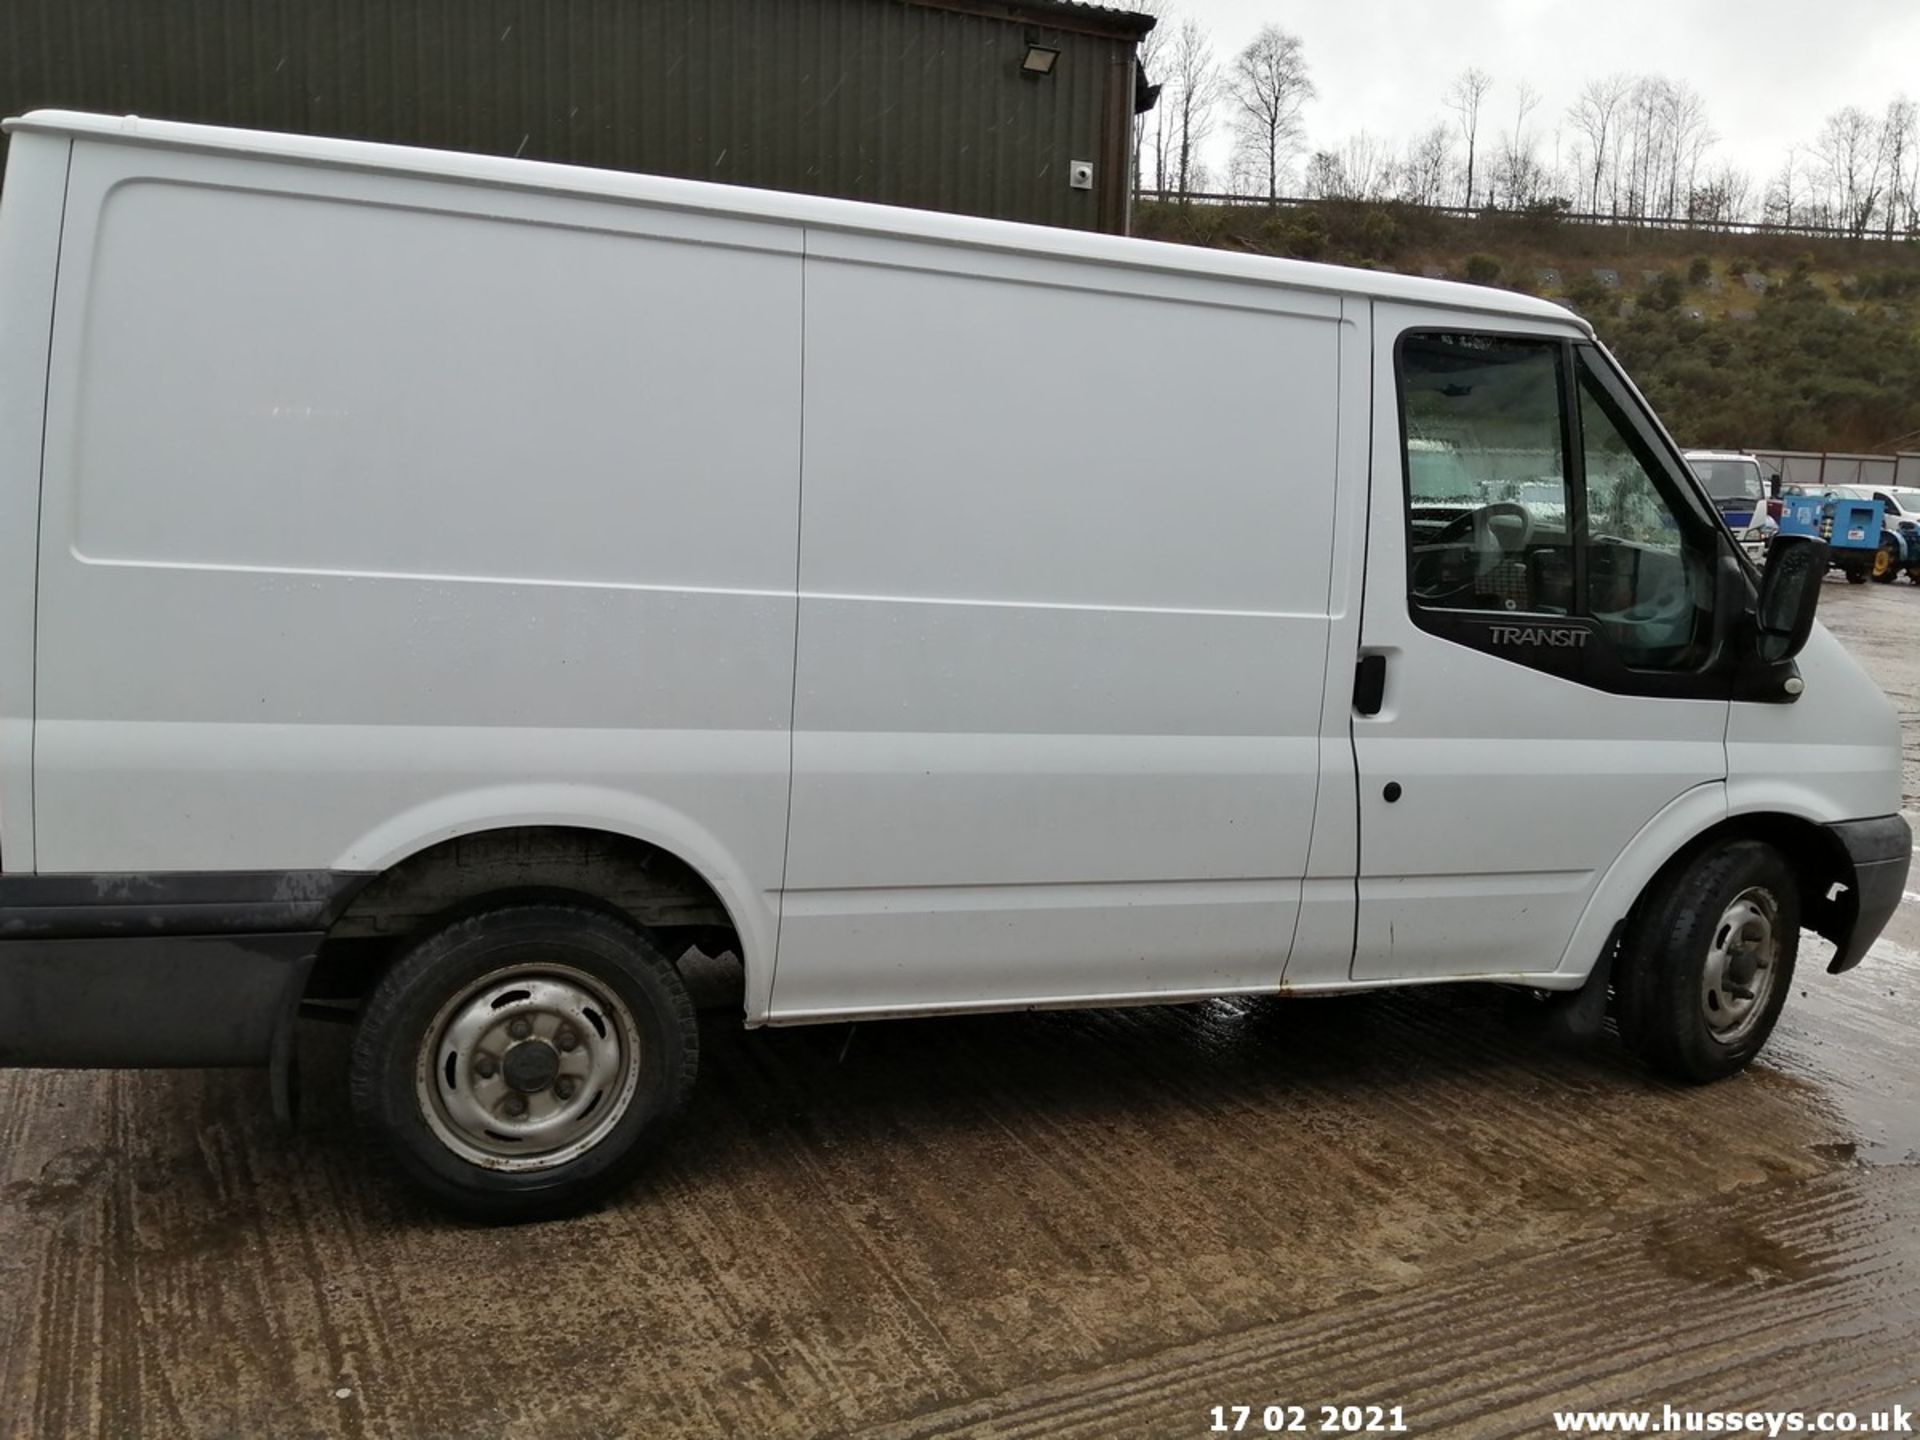 14/14 FORD TRANSIT 100 T280 FWD - 2198cc 5dr Van (White, 100k) - Image 7 of 11